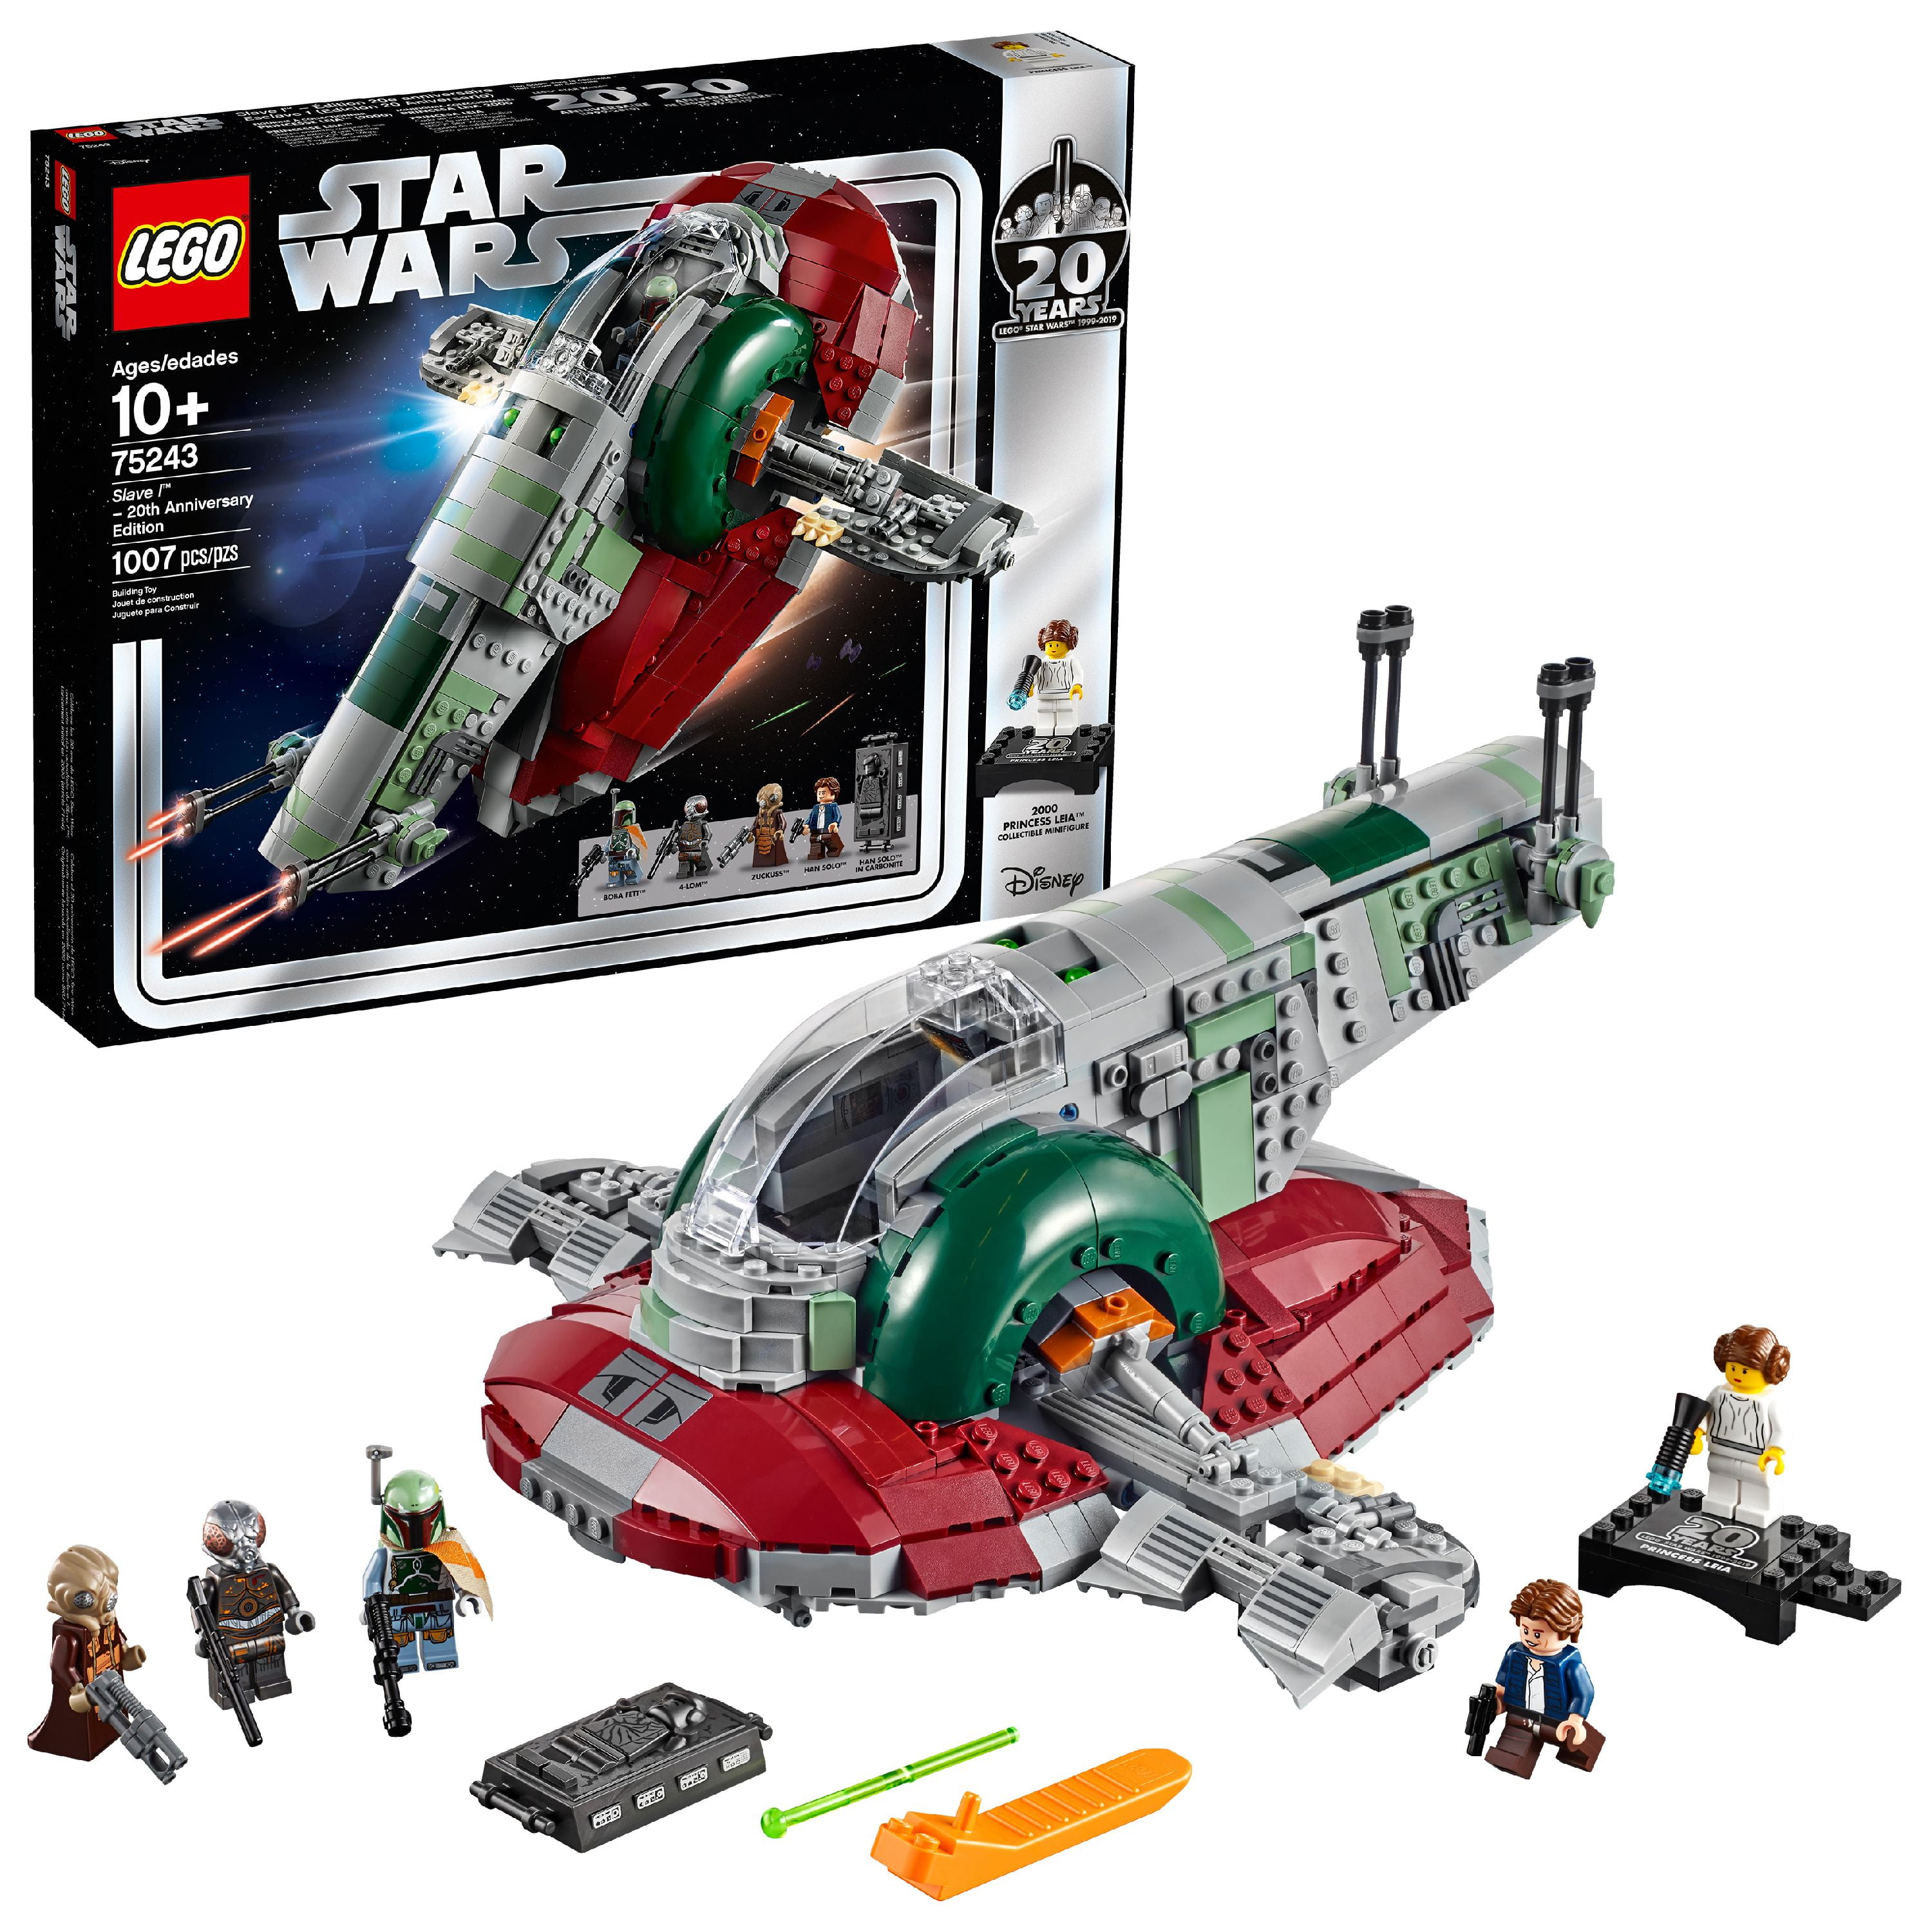 LEGO Star Wars Slave l - 20th Anniversary Building Kit Walmart.com